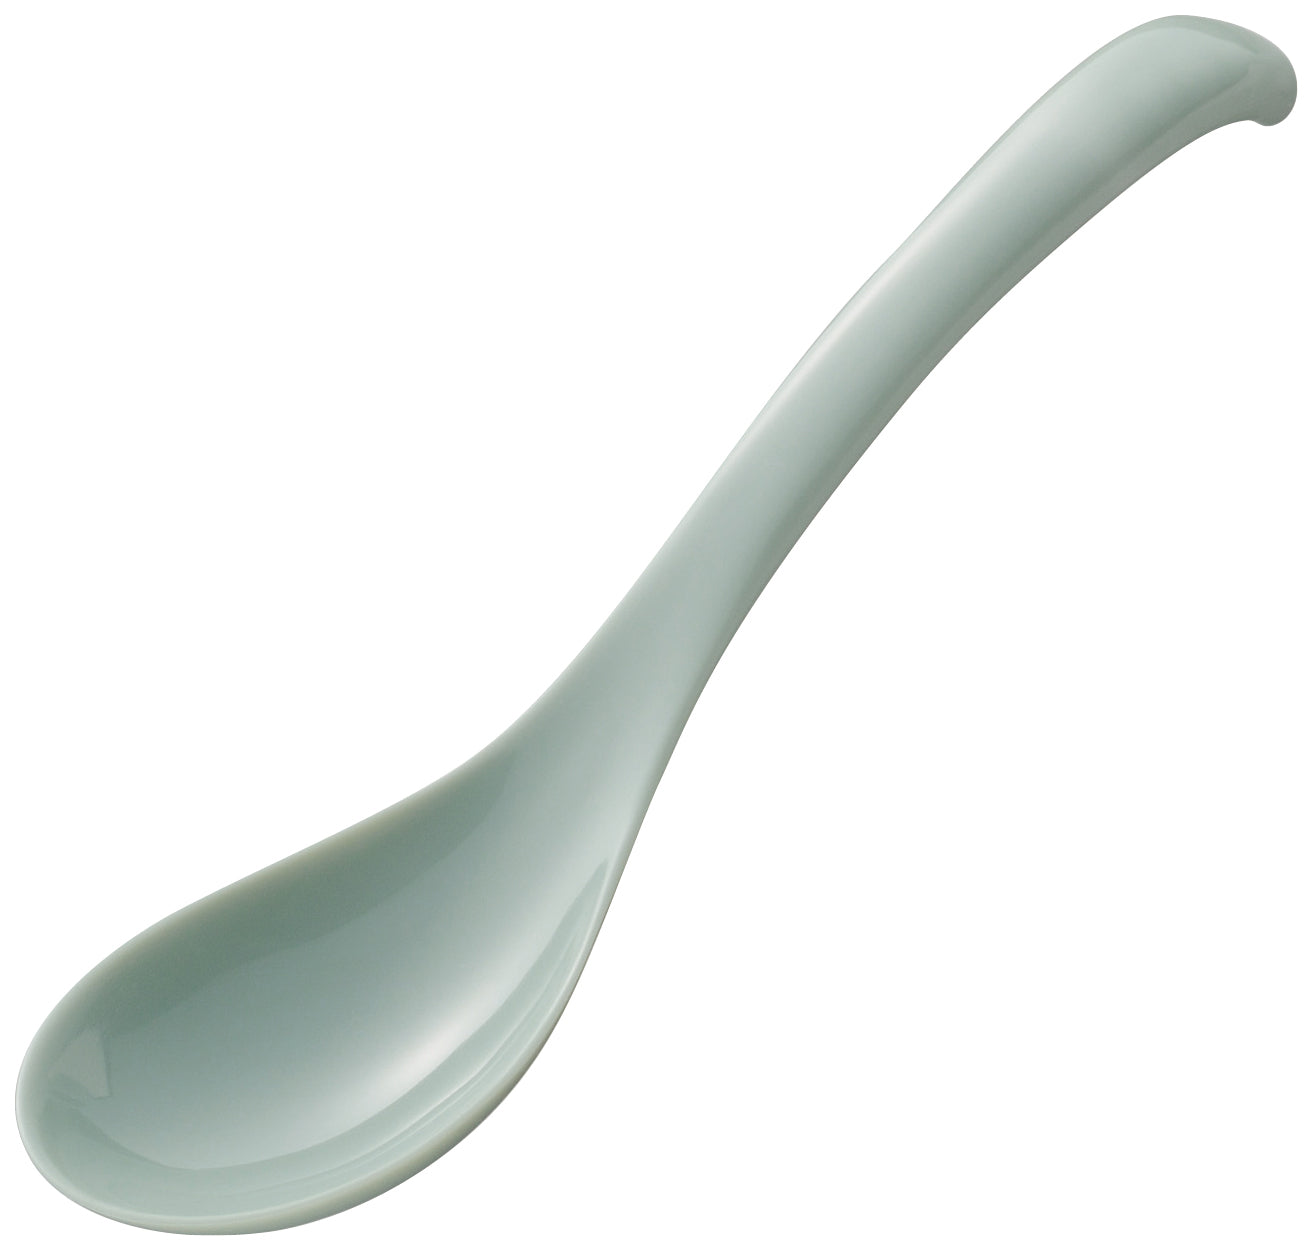 Convenient Renge Lotus Spoon